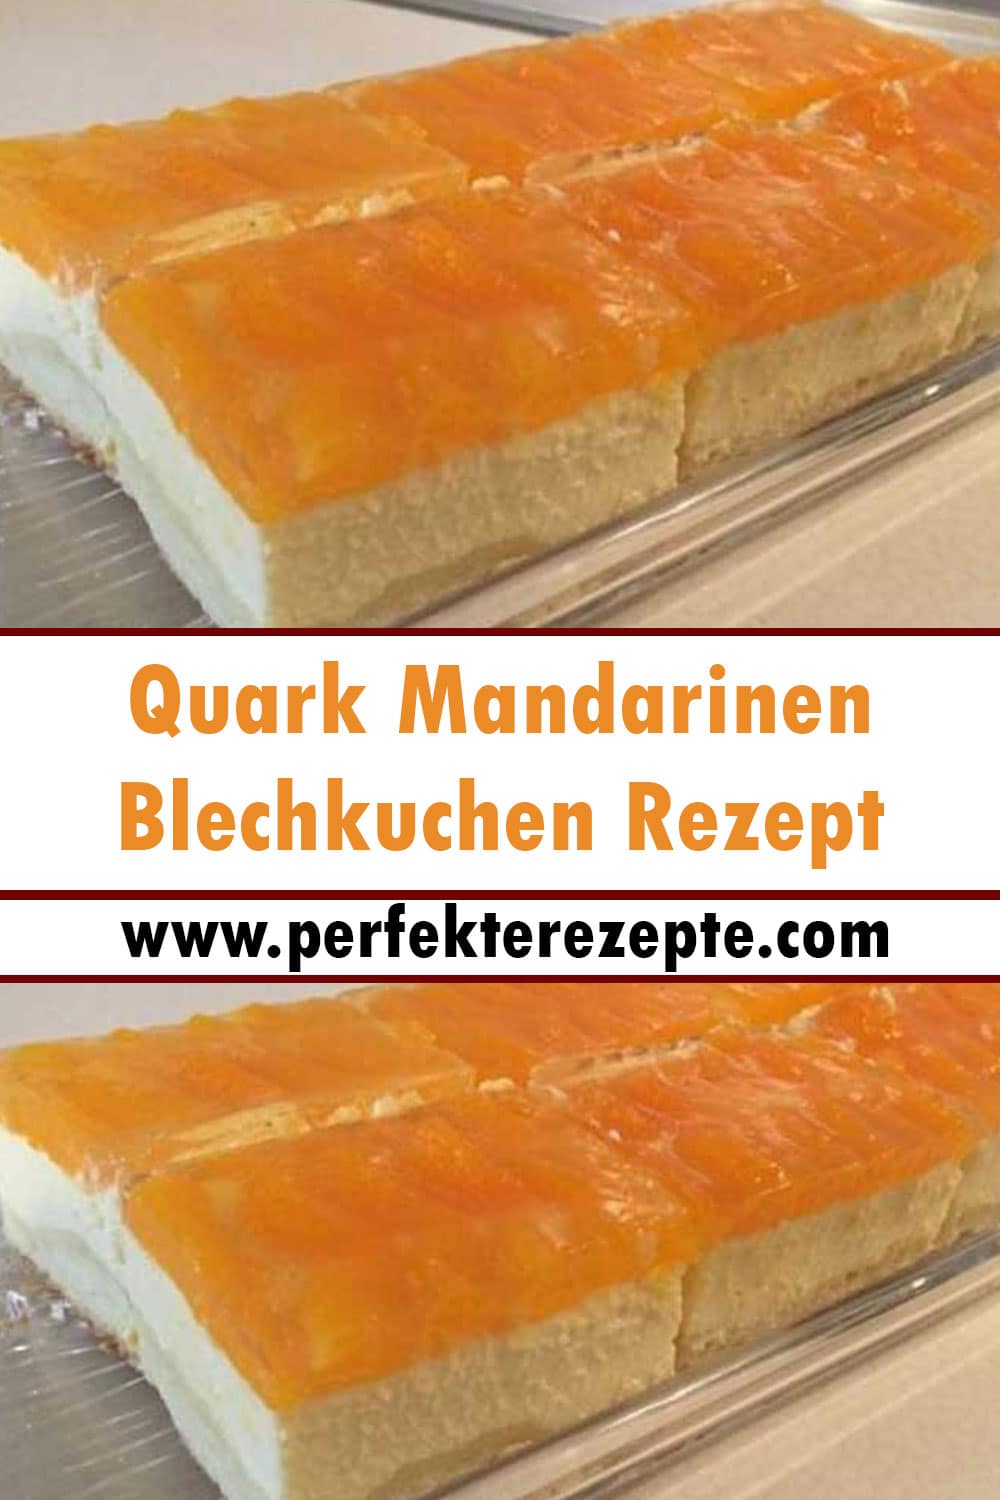 Quark Mandarinen Blechkuchen Rezept